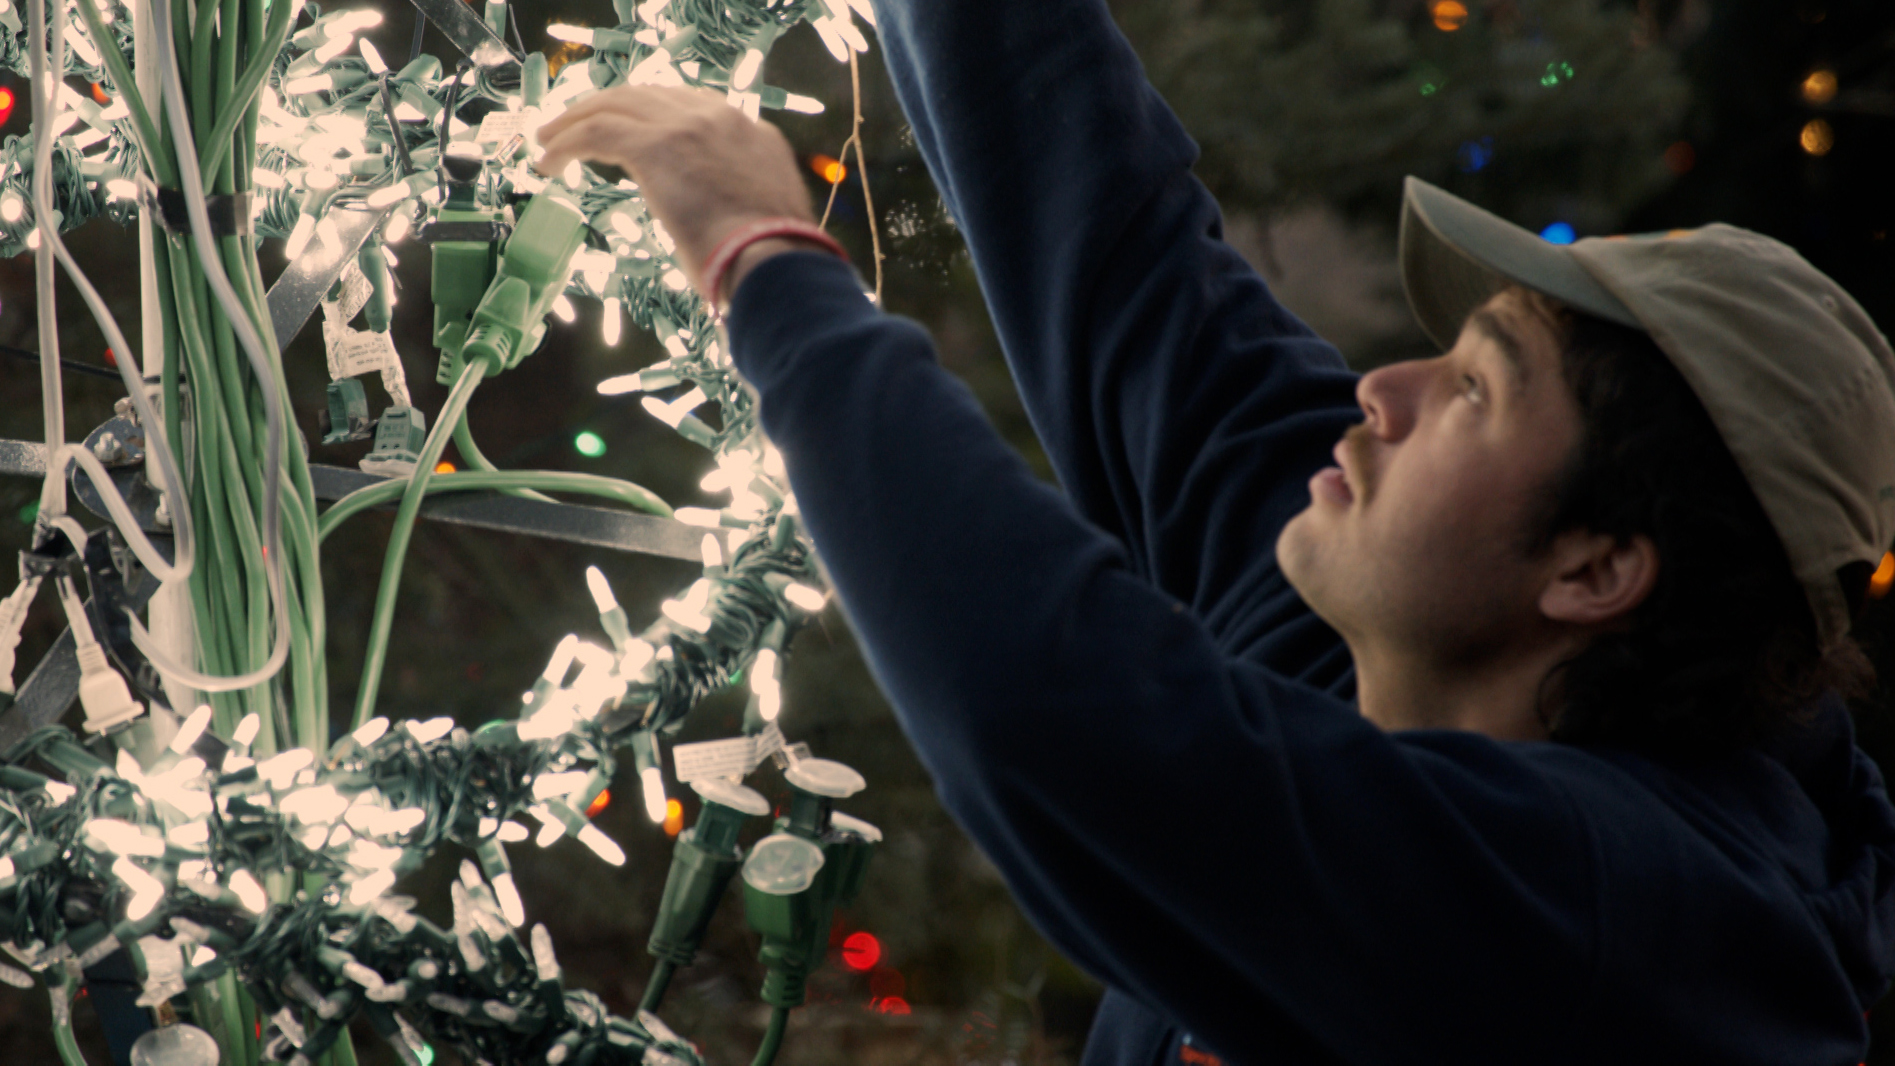 Peter hanging up Christmas lights. Credit: WXXI.